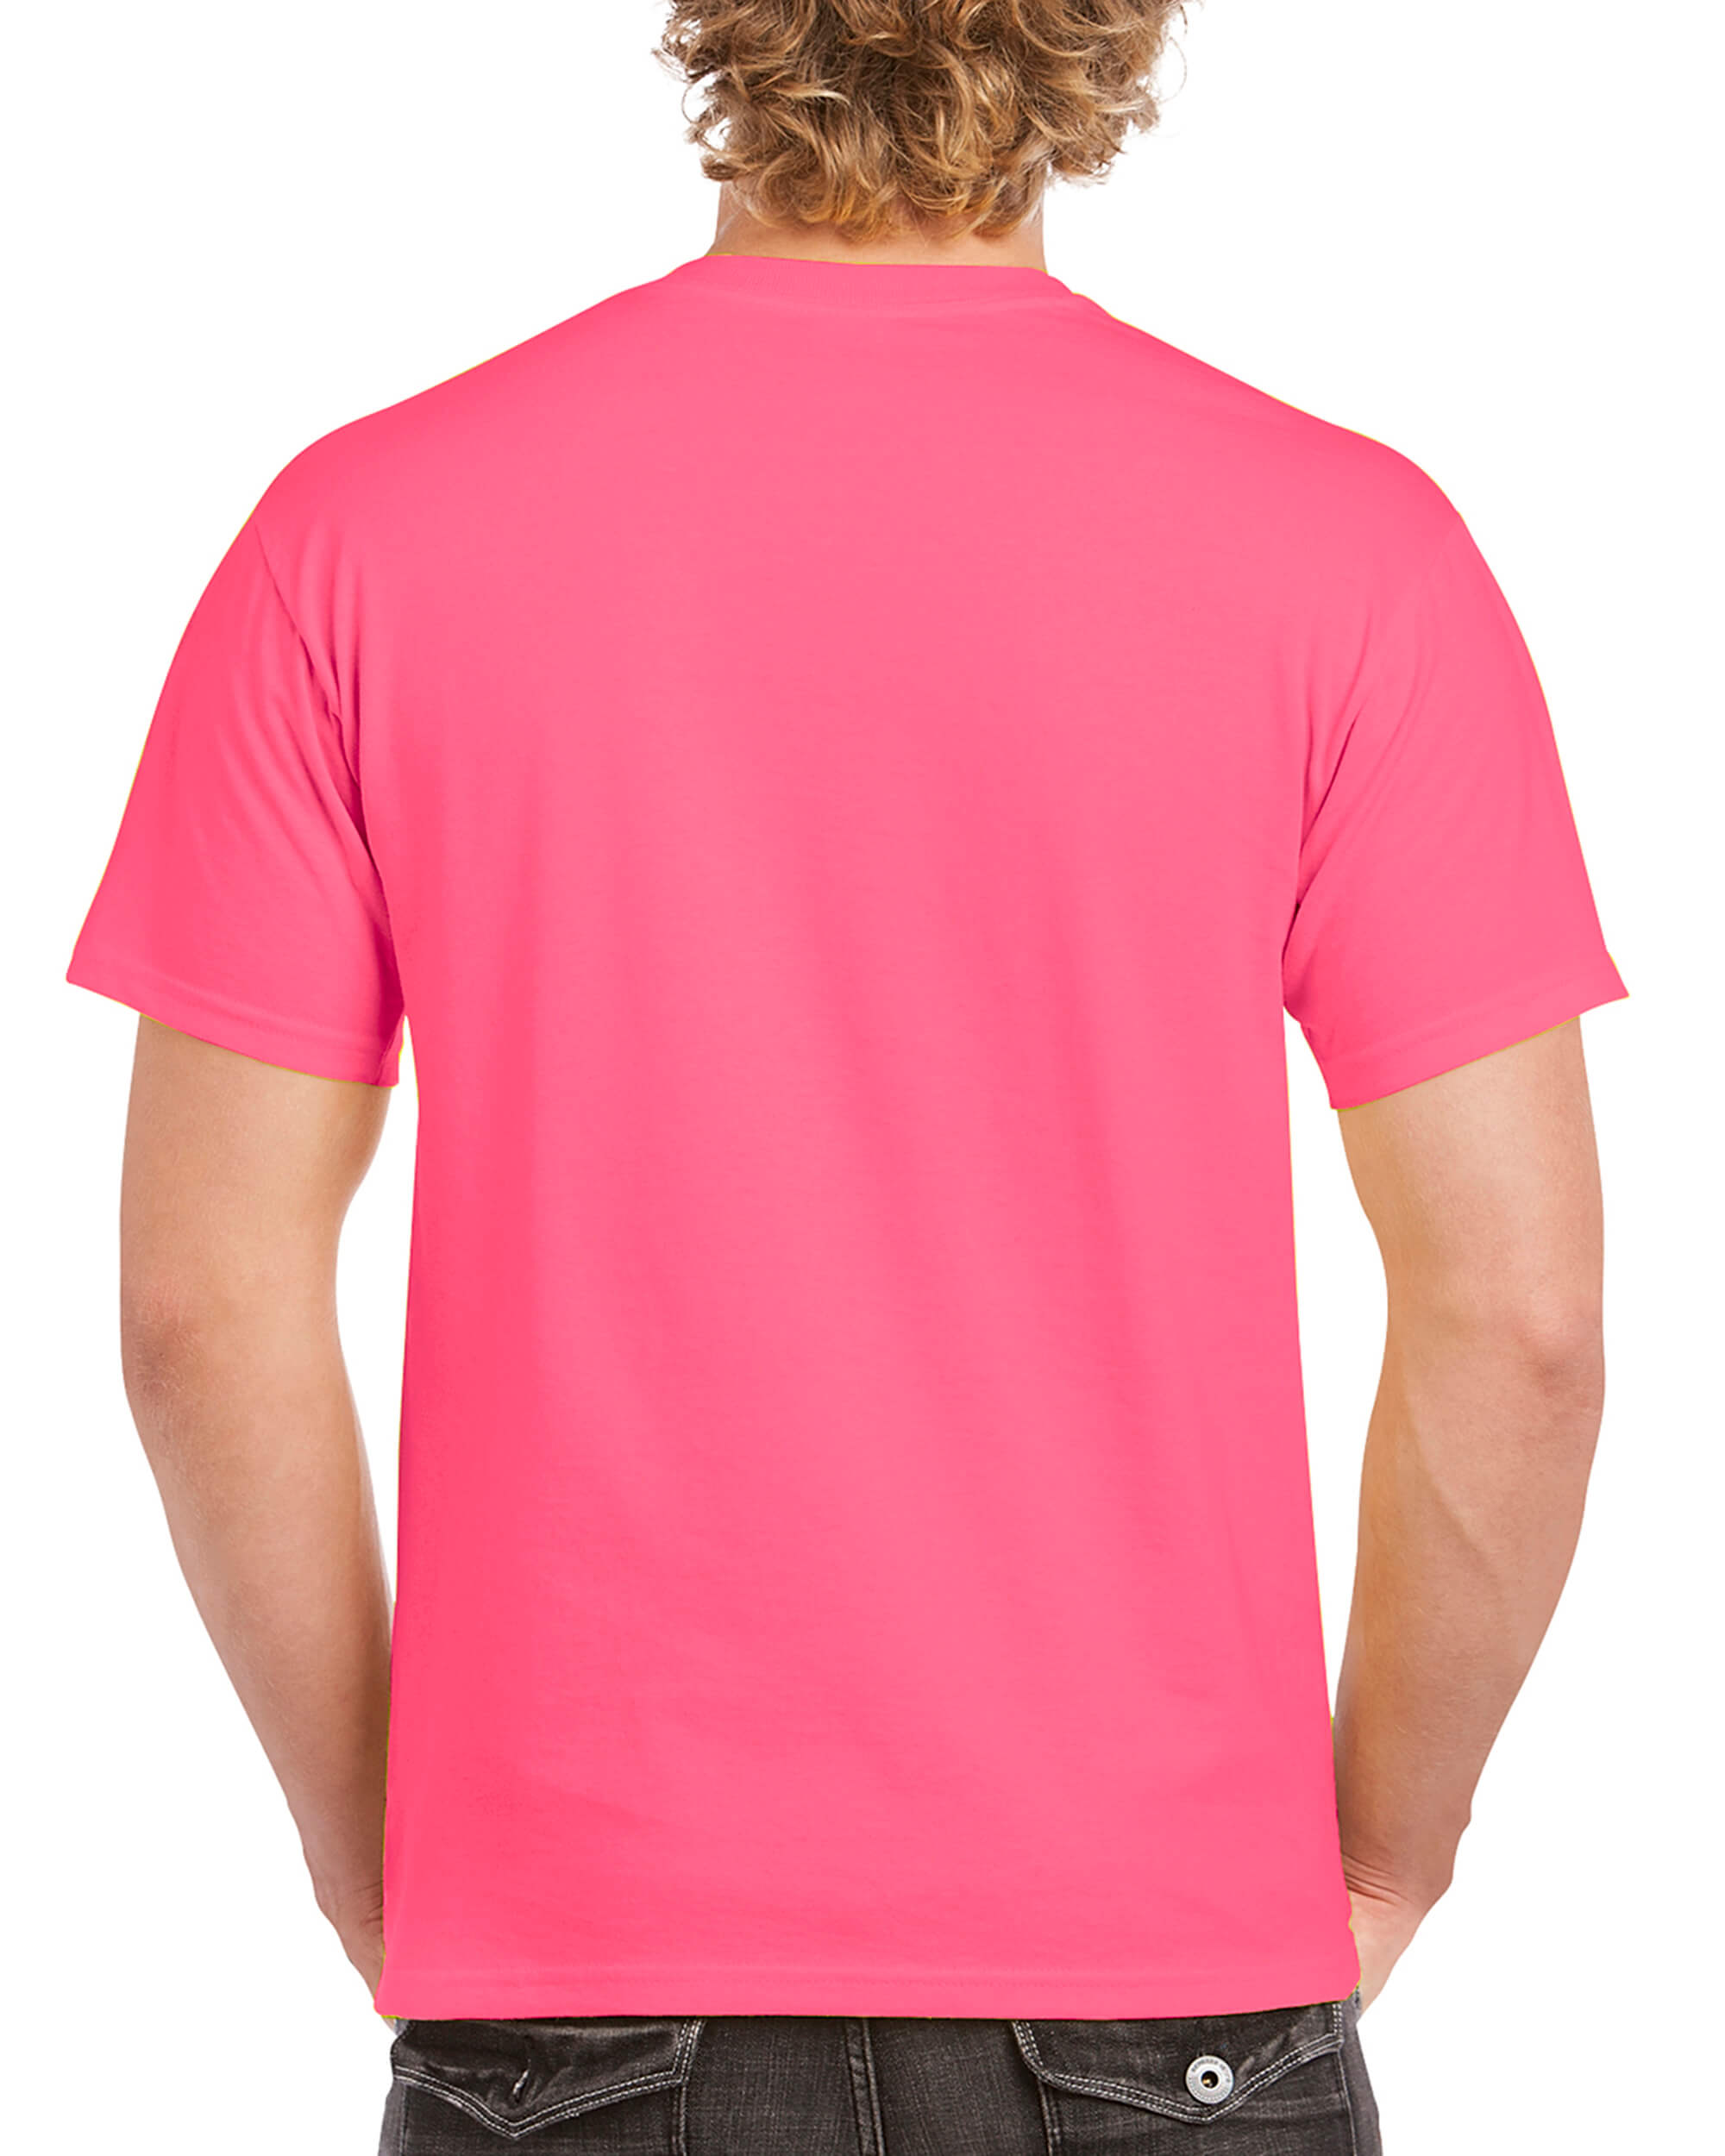 T-Shirt - Safety Pink